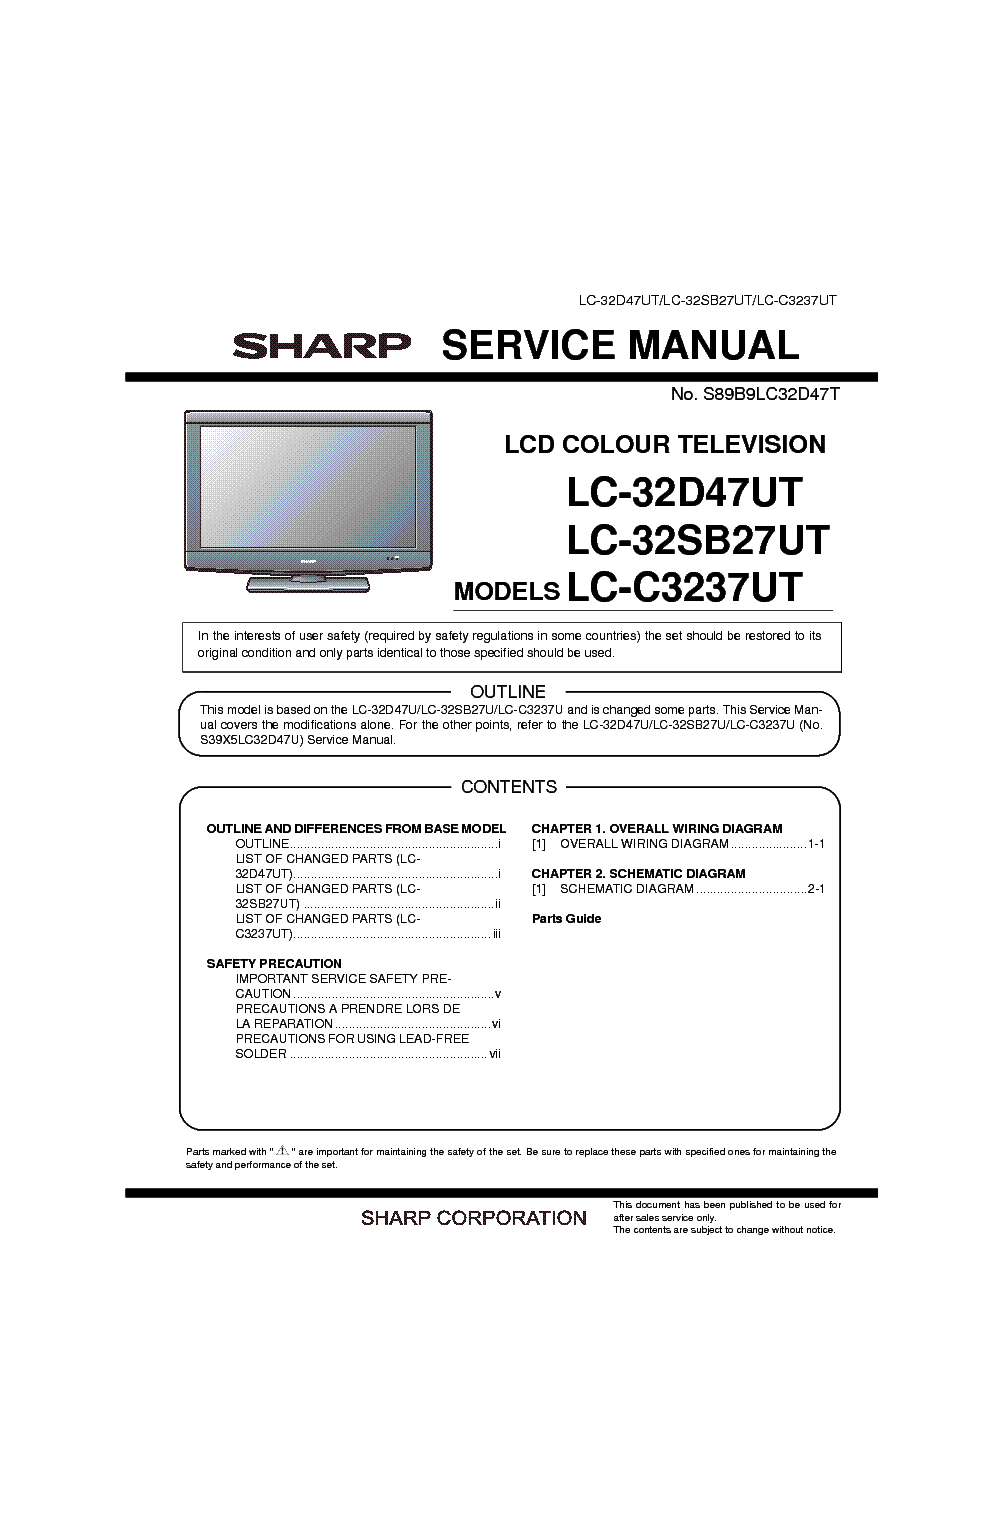 SHARP LC-32D47UT LC-32SB27UT LC-C3237UT SUPPLEMENT service manual (1st page)